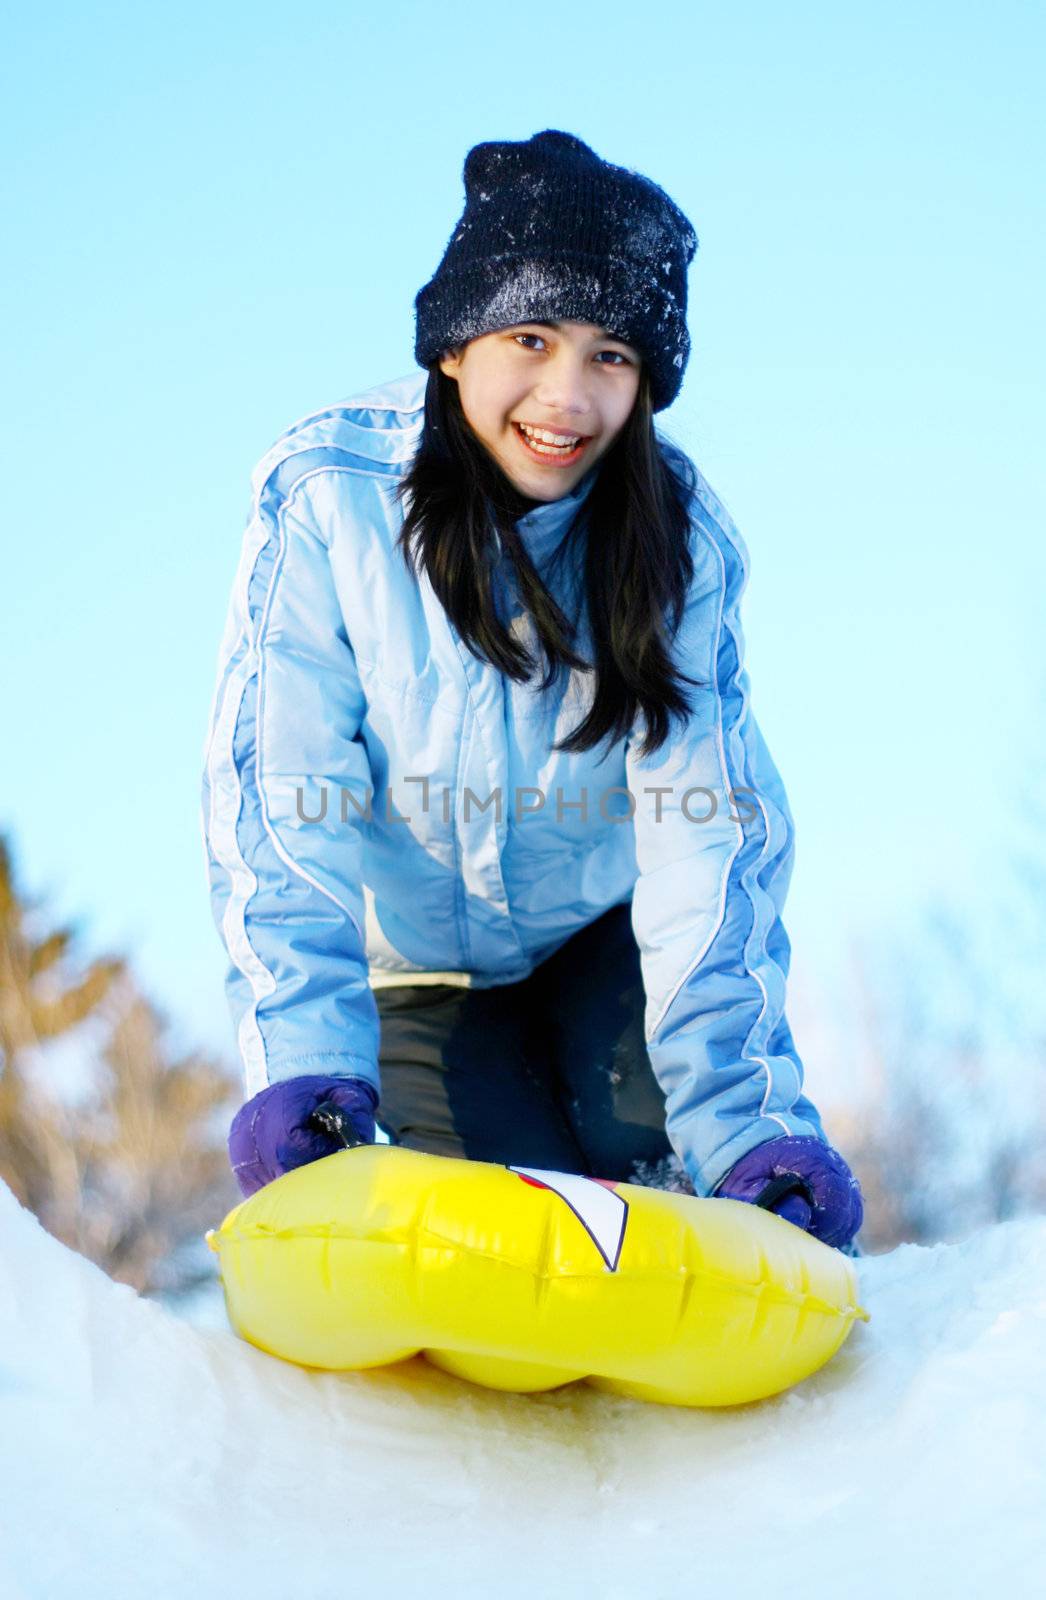 Biracial teen girl sledding down snow hill by jarenwicklund